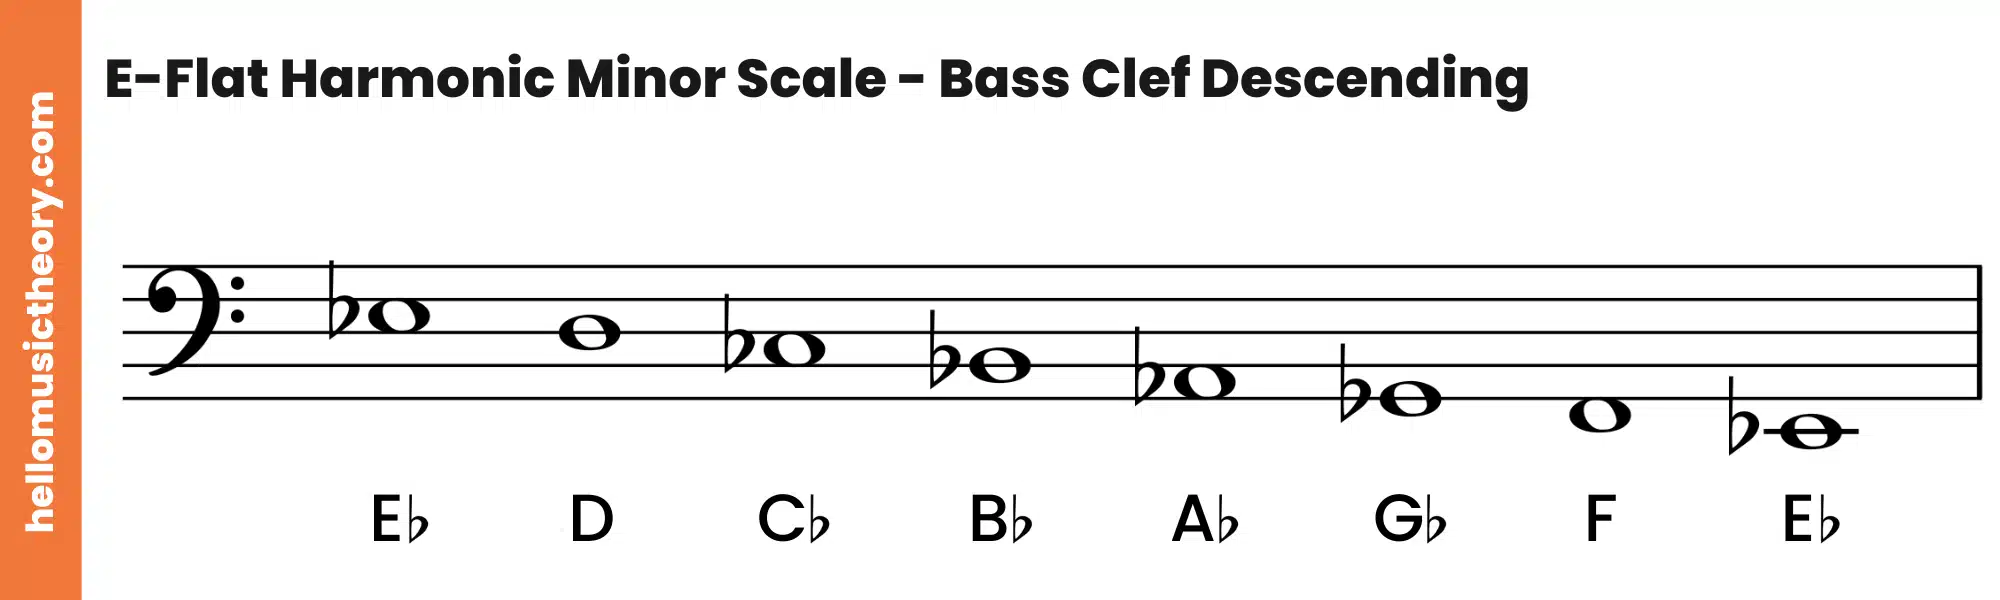 E-Flat Harmonic Minor Scale Bass Clef Descending